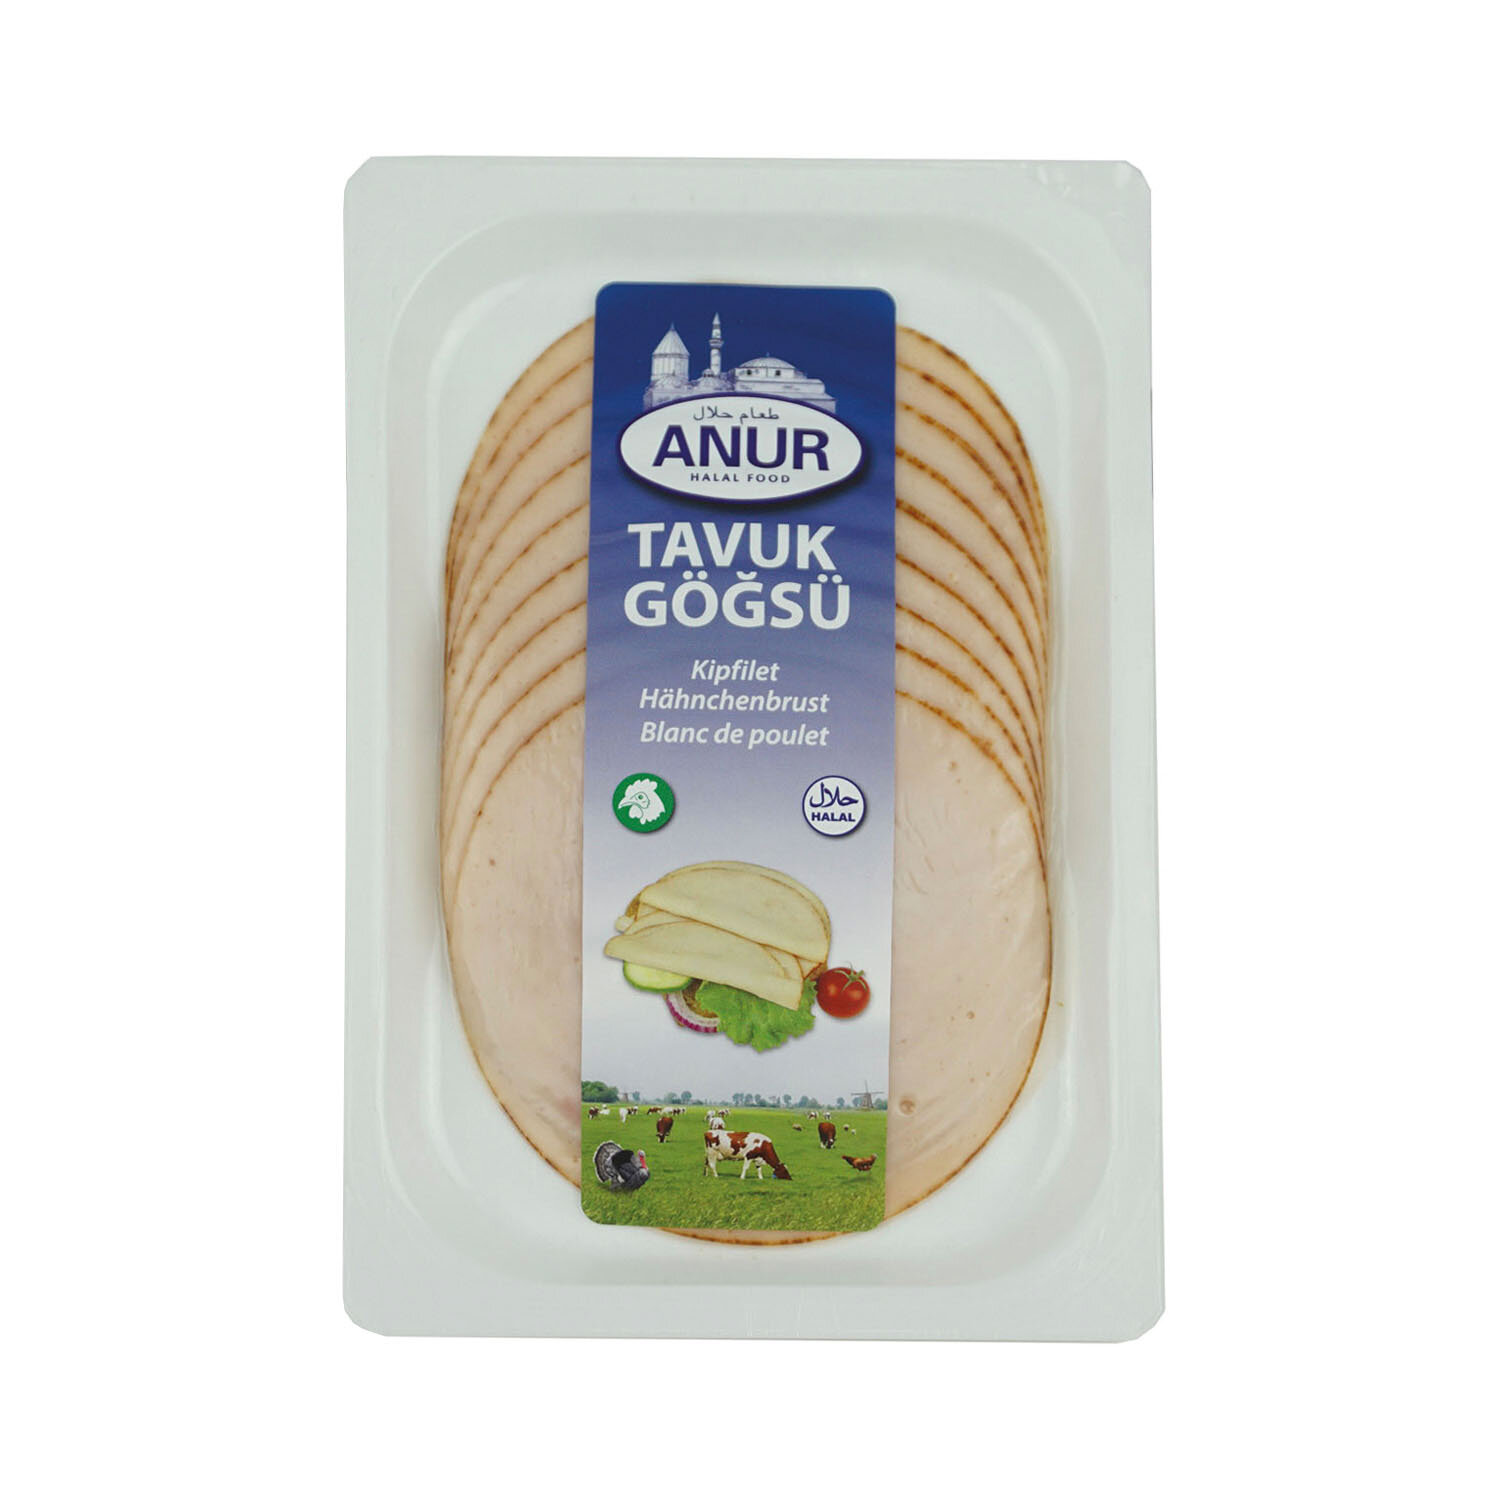 Tavuk Gogsu - Kipfilet - ANUR Halal Food  (Copy) (Copy)